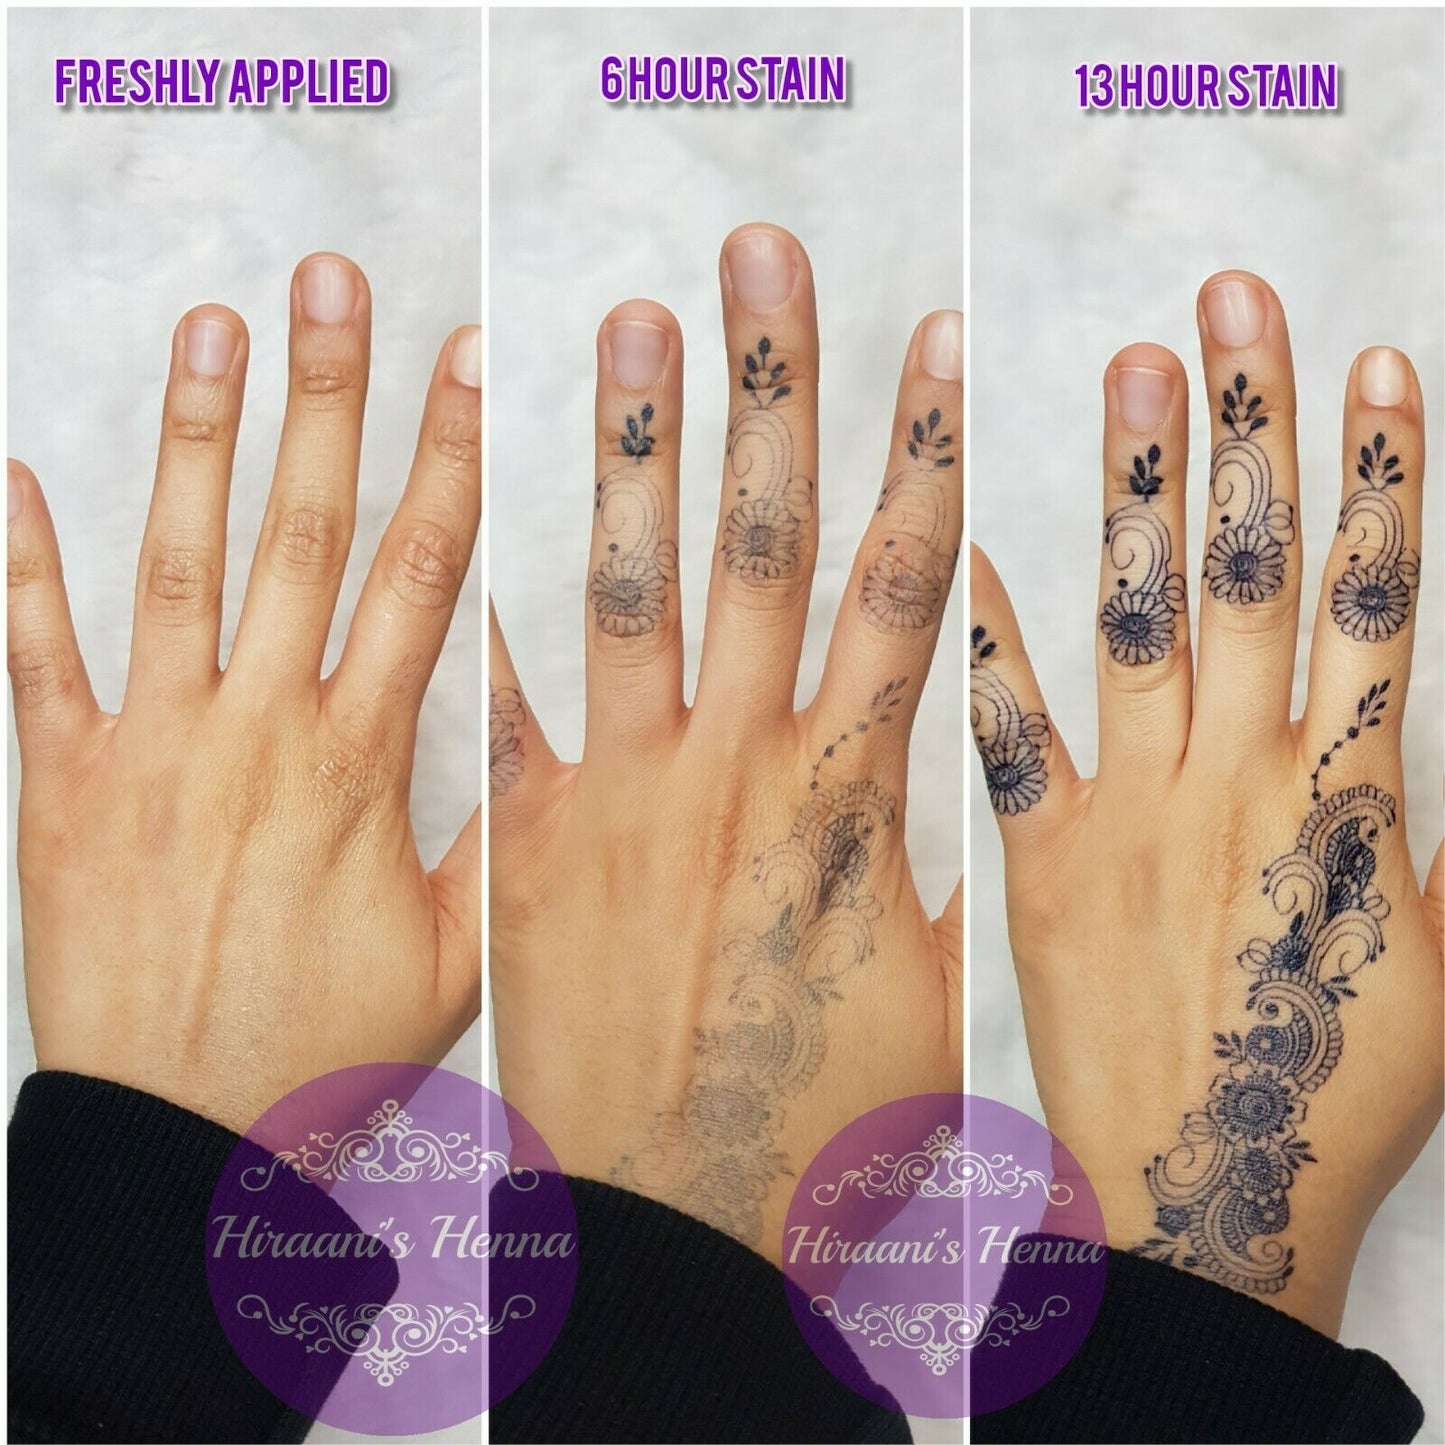 Hiraanis henna jagua gel henna | semi permanent tattoos